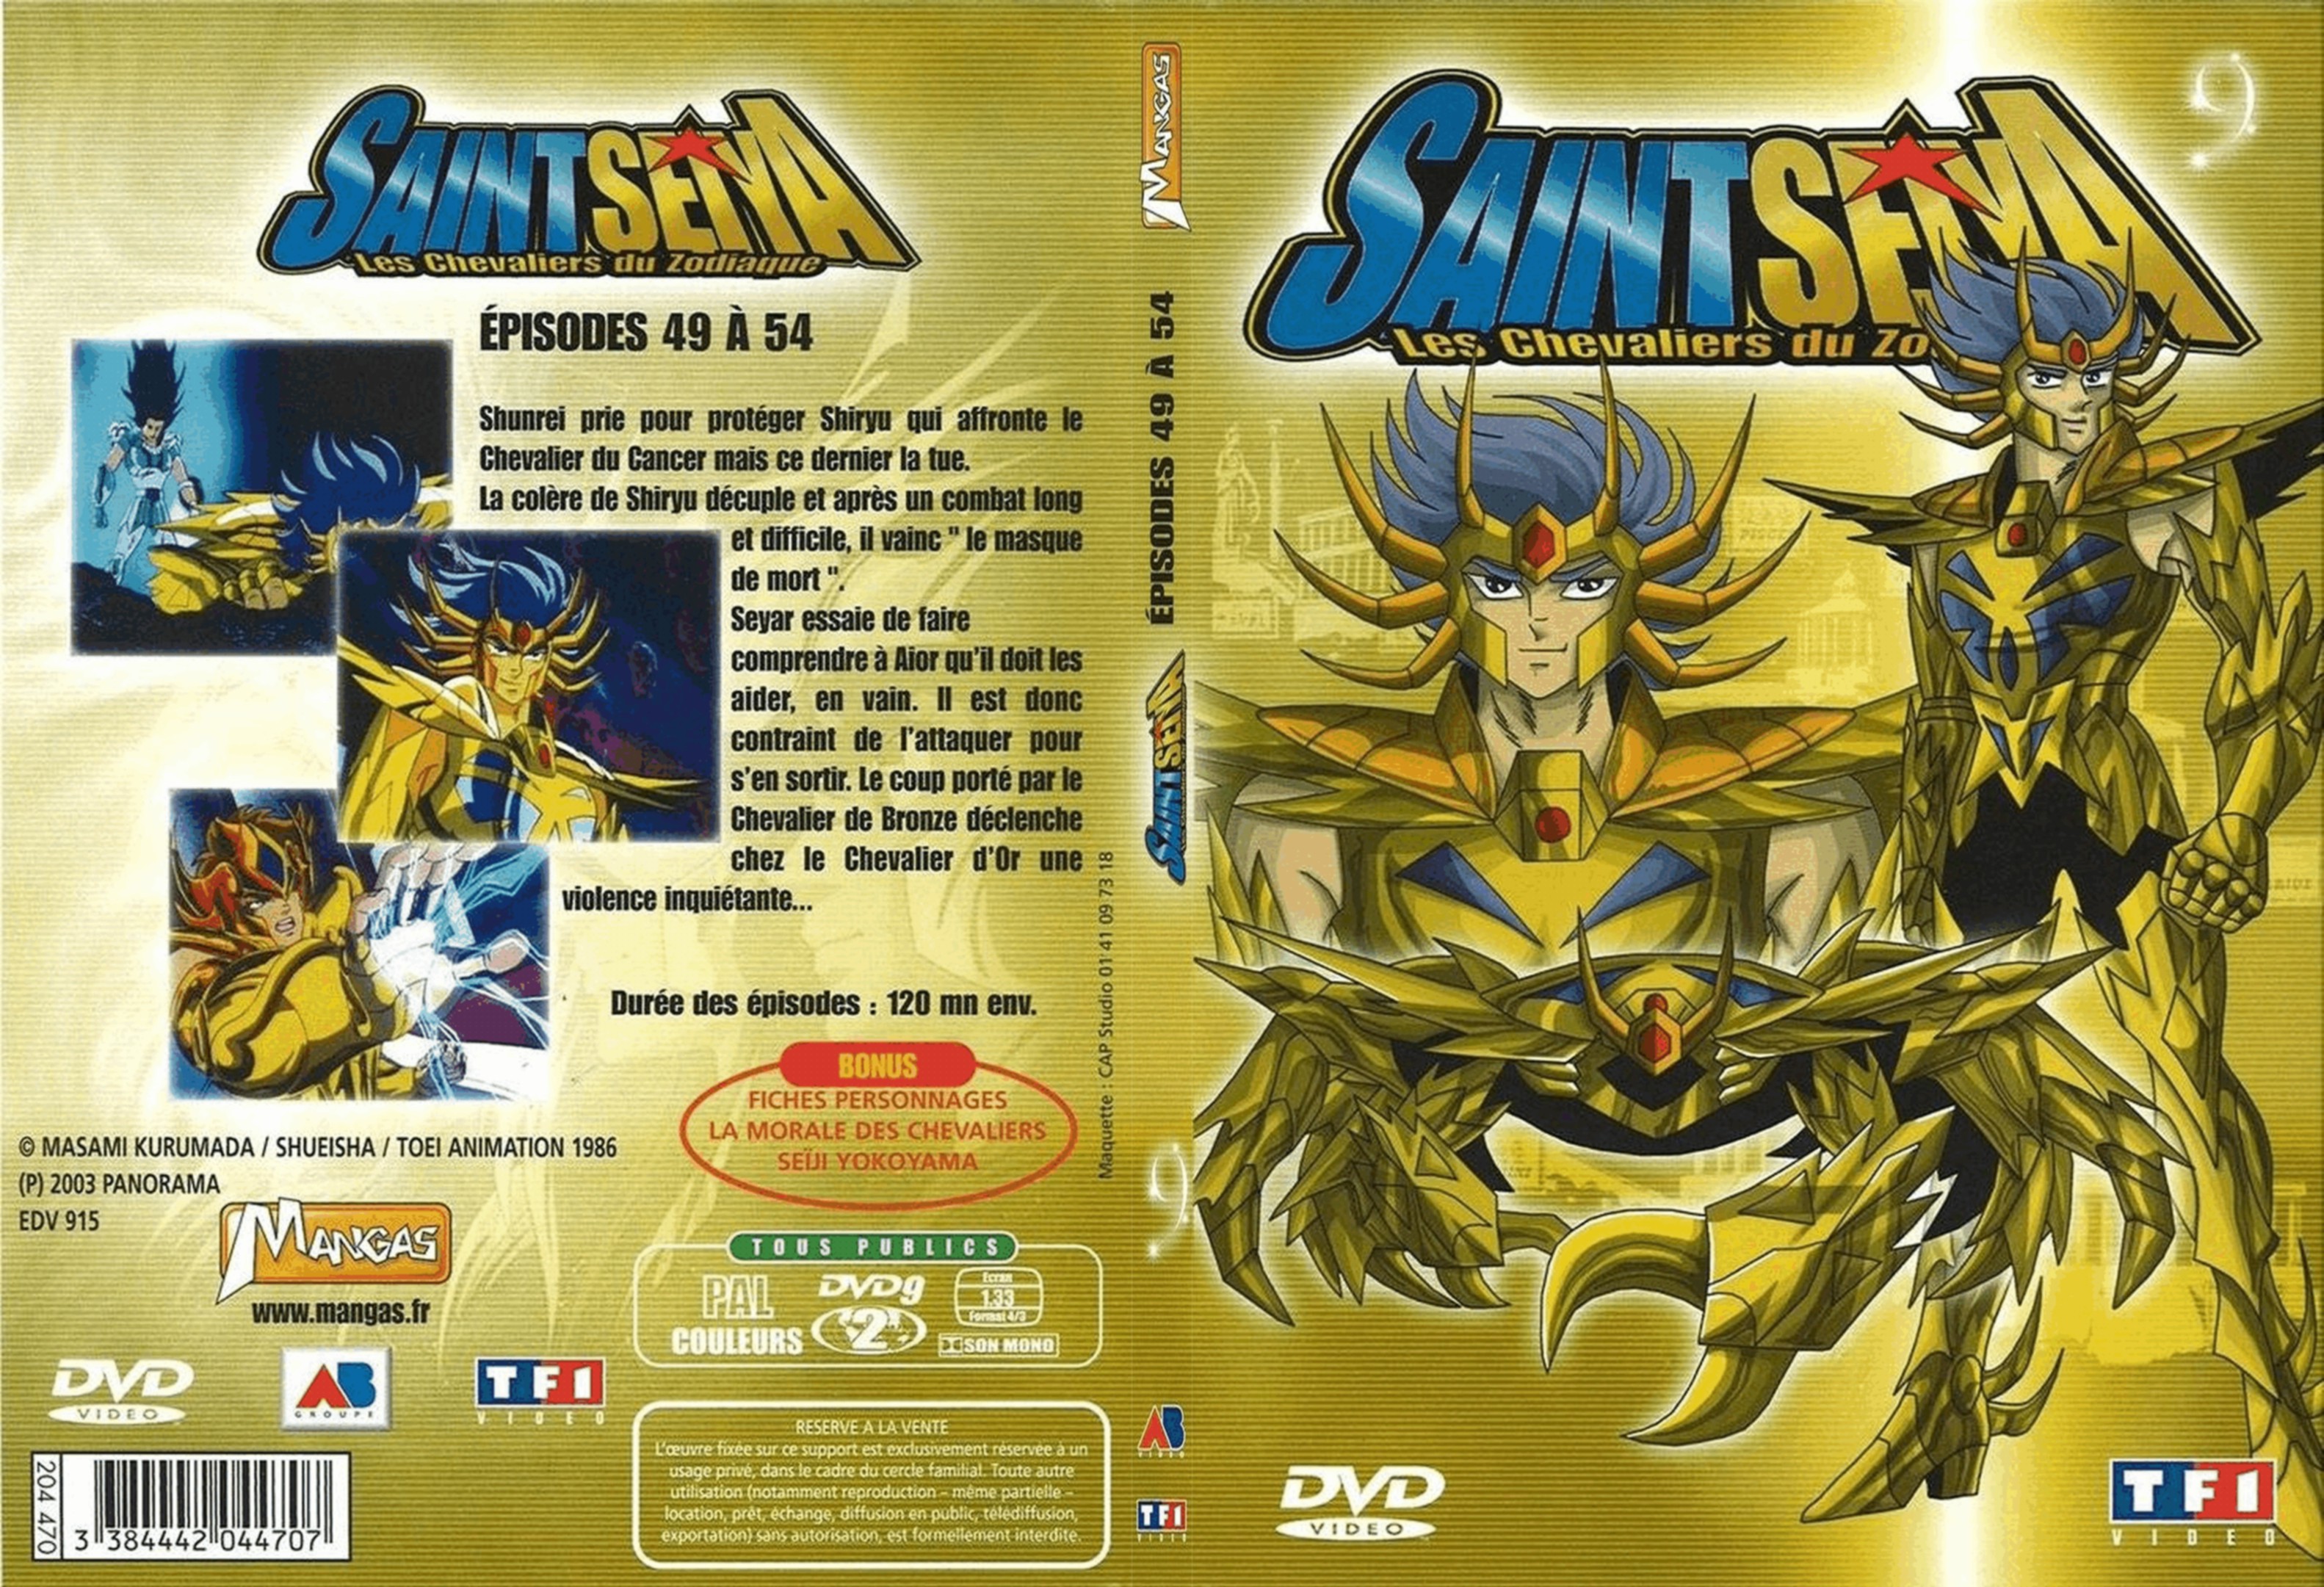 Jaquette DVD Saint Seiya vol 09 - SLIM